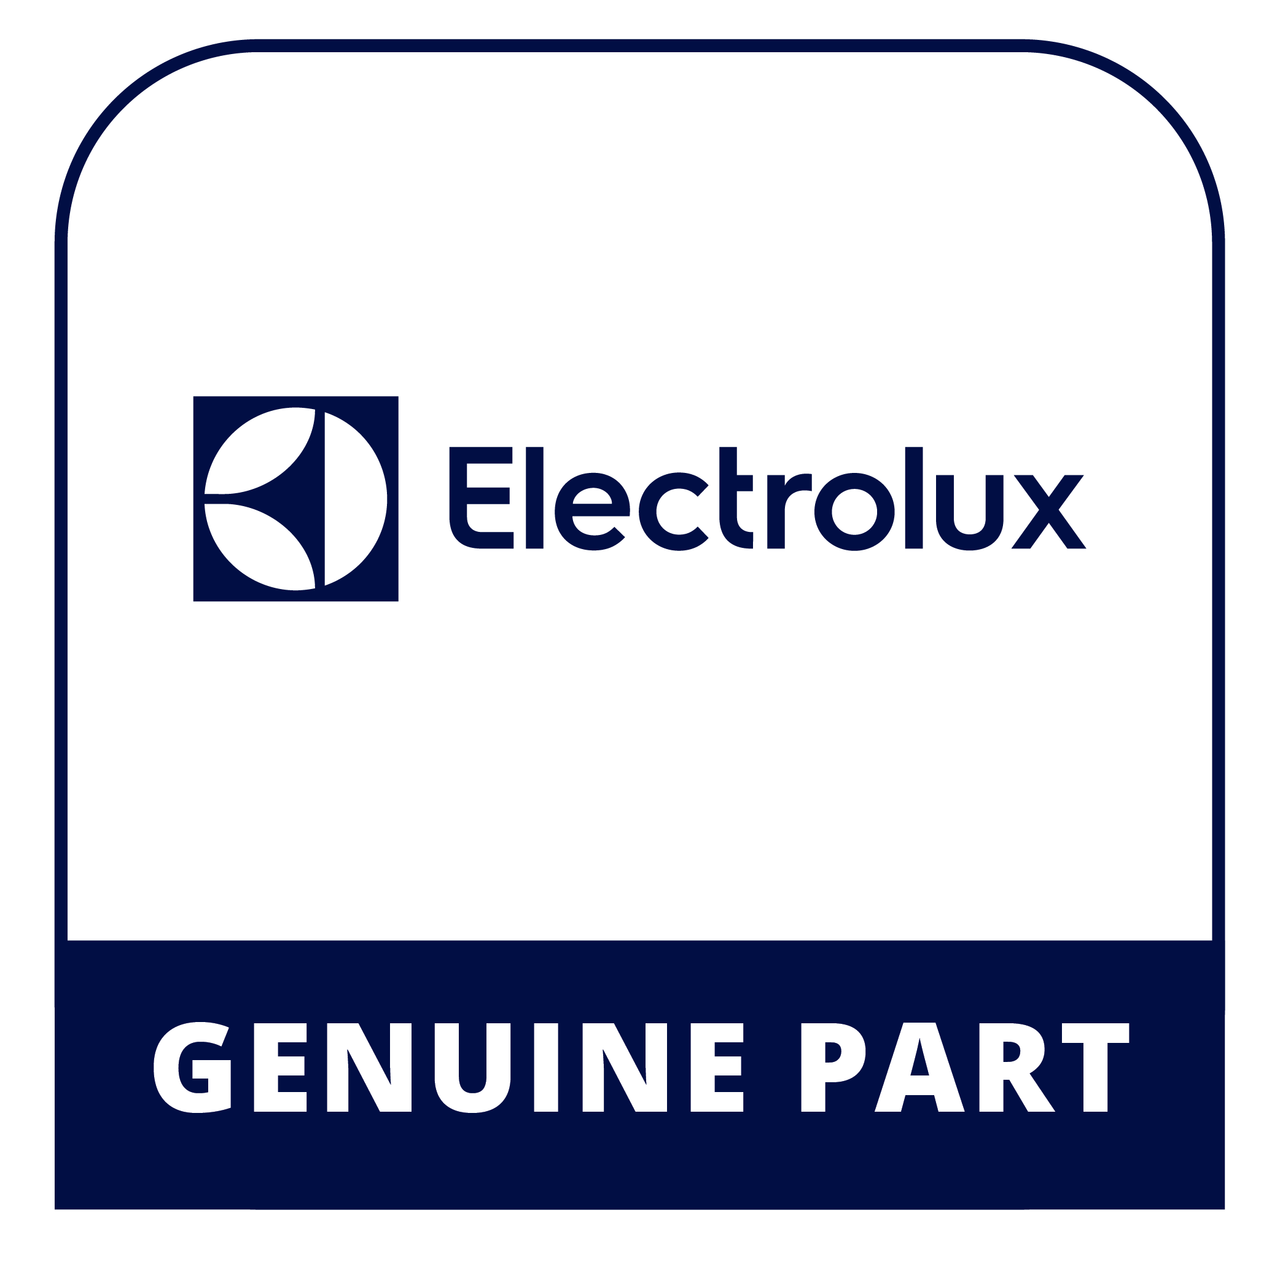 Frigidaire - Electrolux 316219004 - Wiring Harness - Genuine Electrolux Part